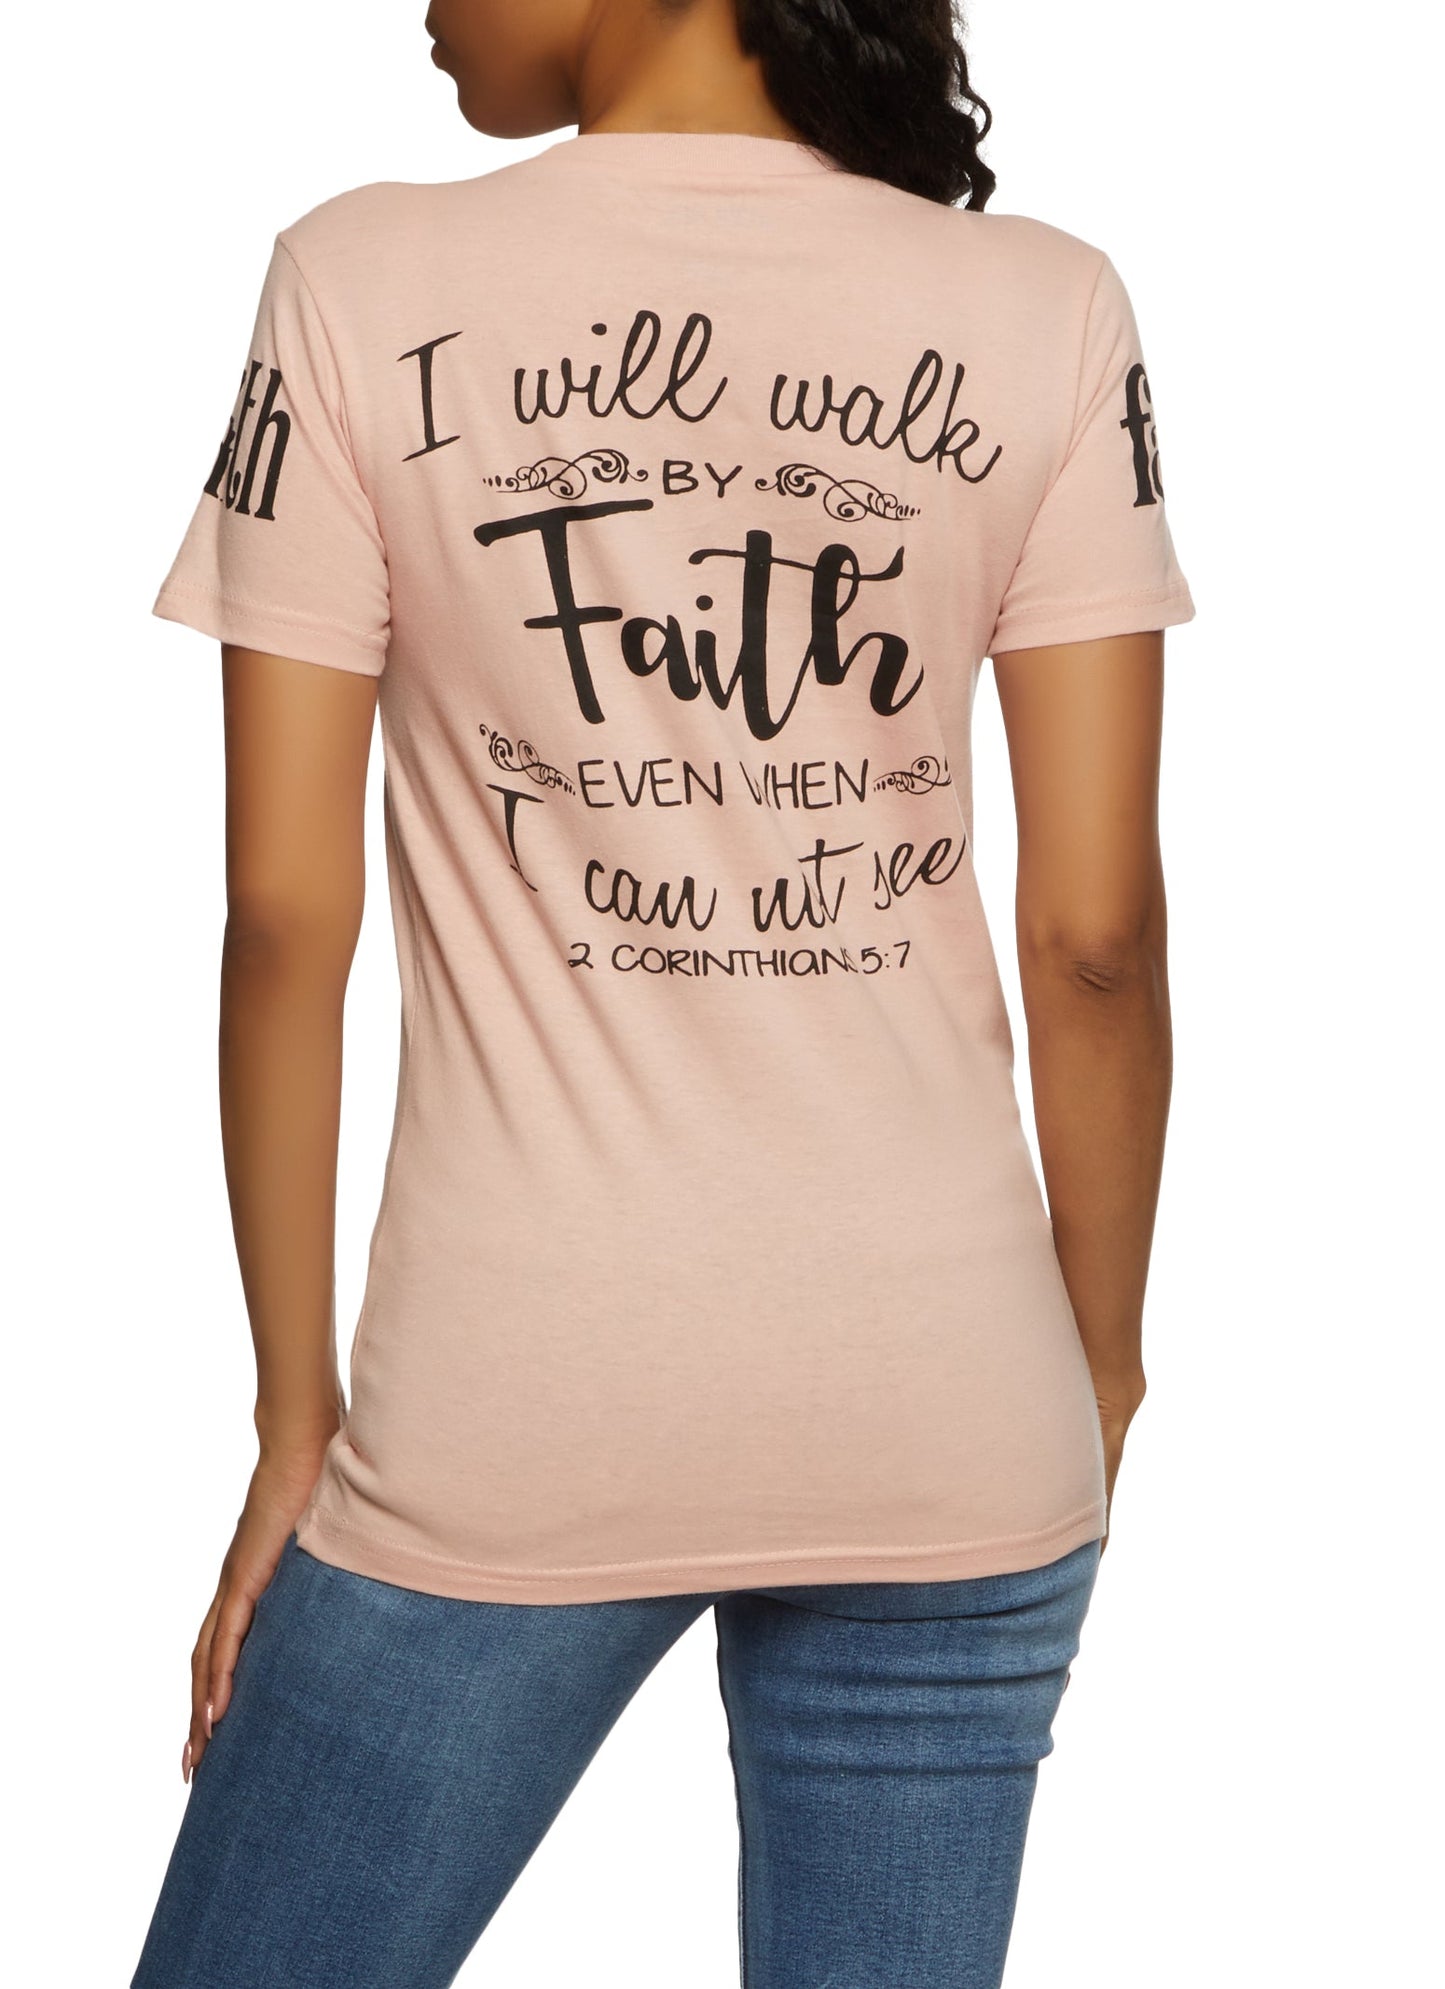 Walk By Faith Not By Sight Sequin Tee